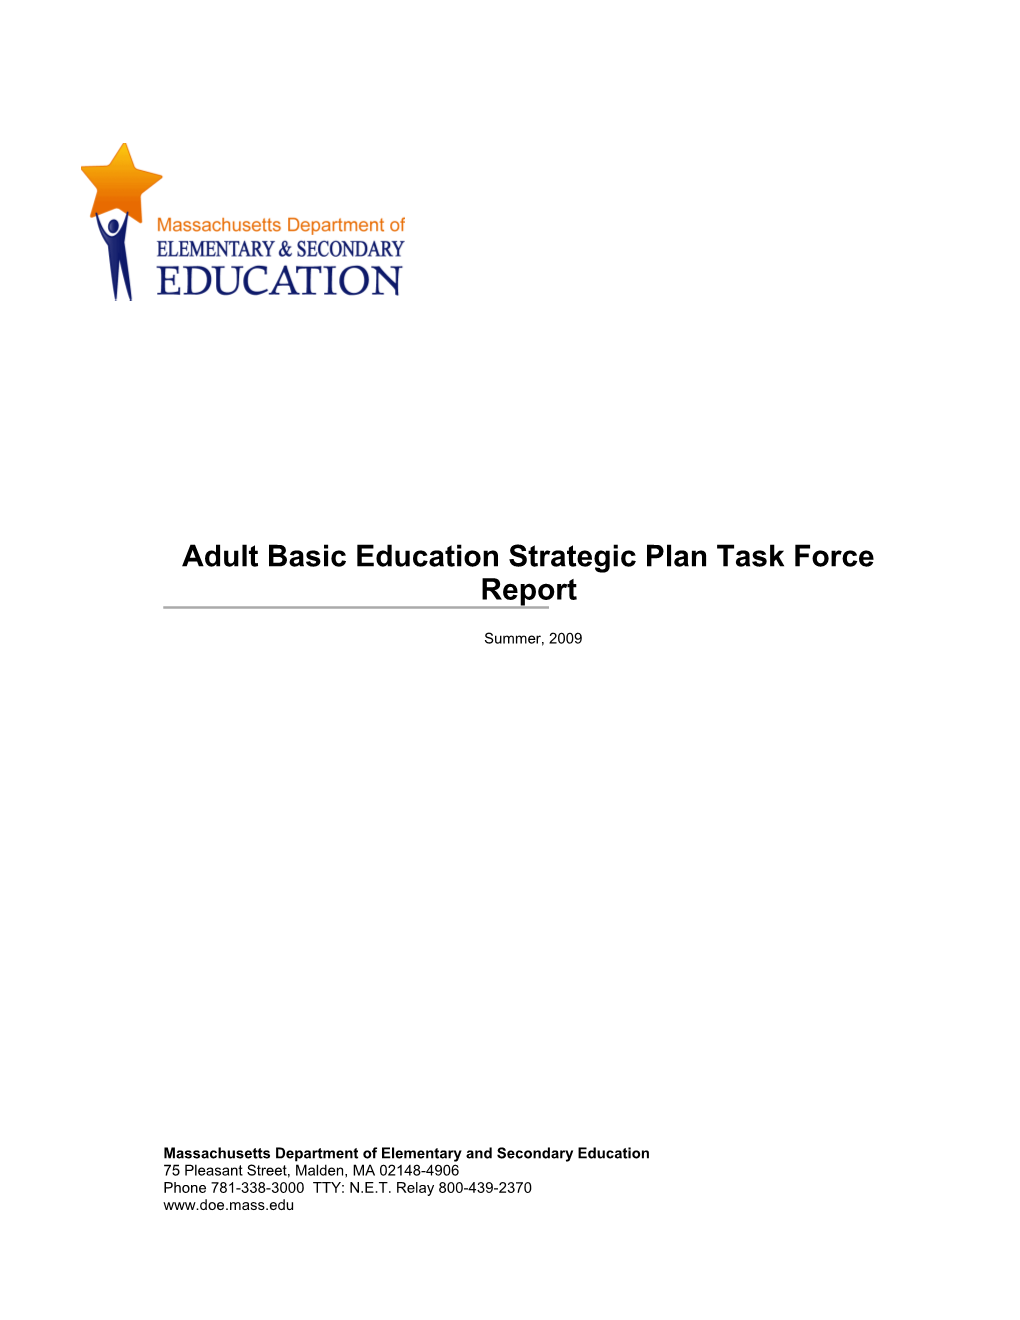 Adult Basic Education Strategic Plan Task Force Report Summer, 2009